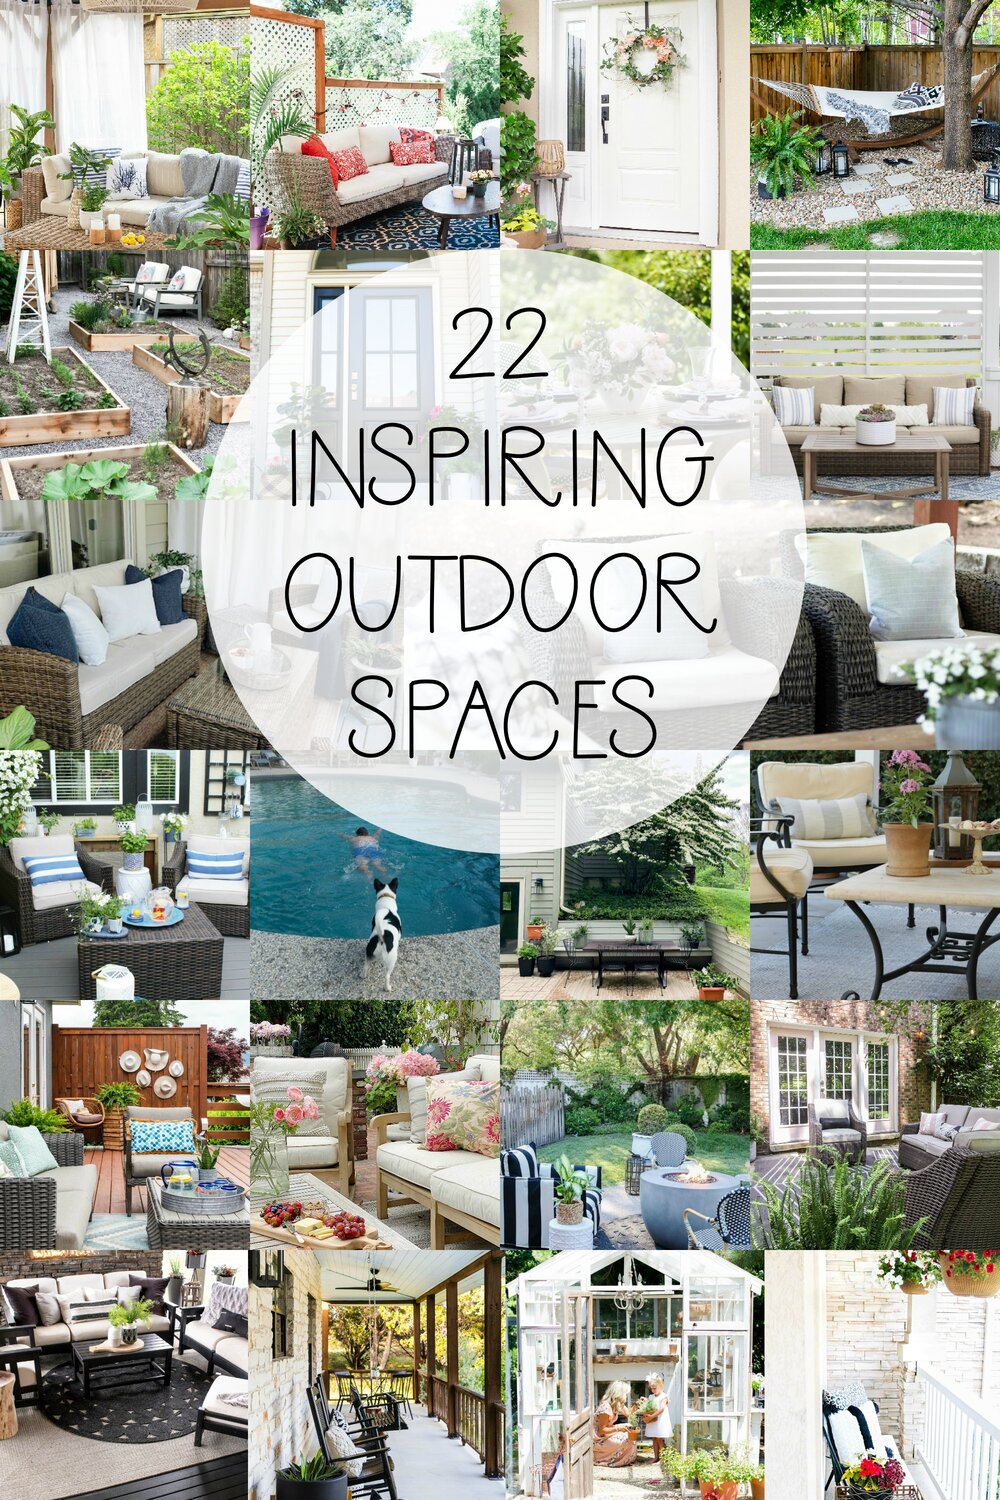 22 Inspiring Outdoor Spaces .jpg